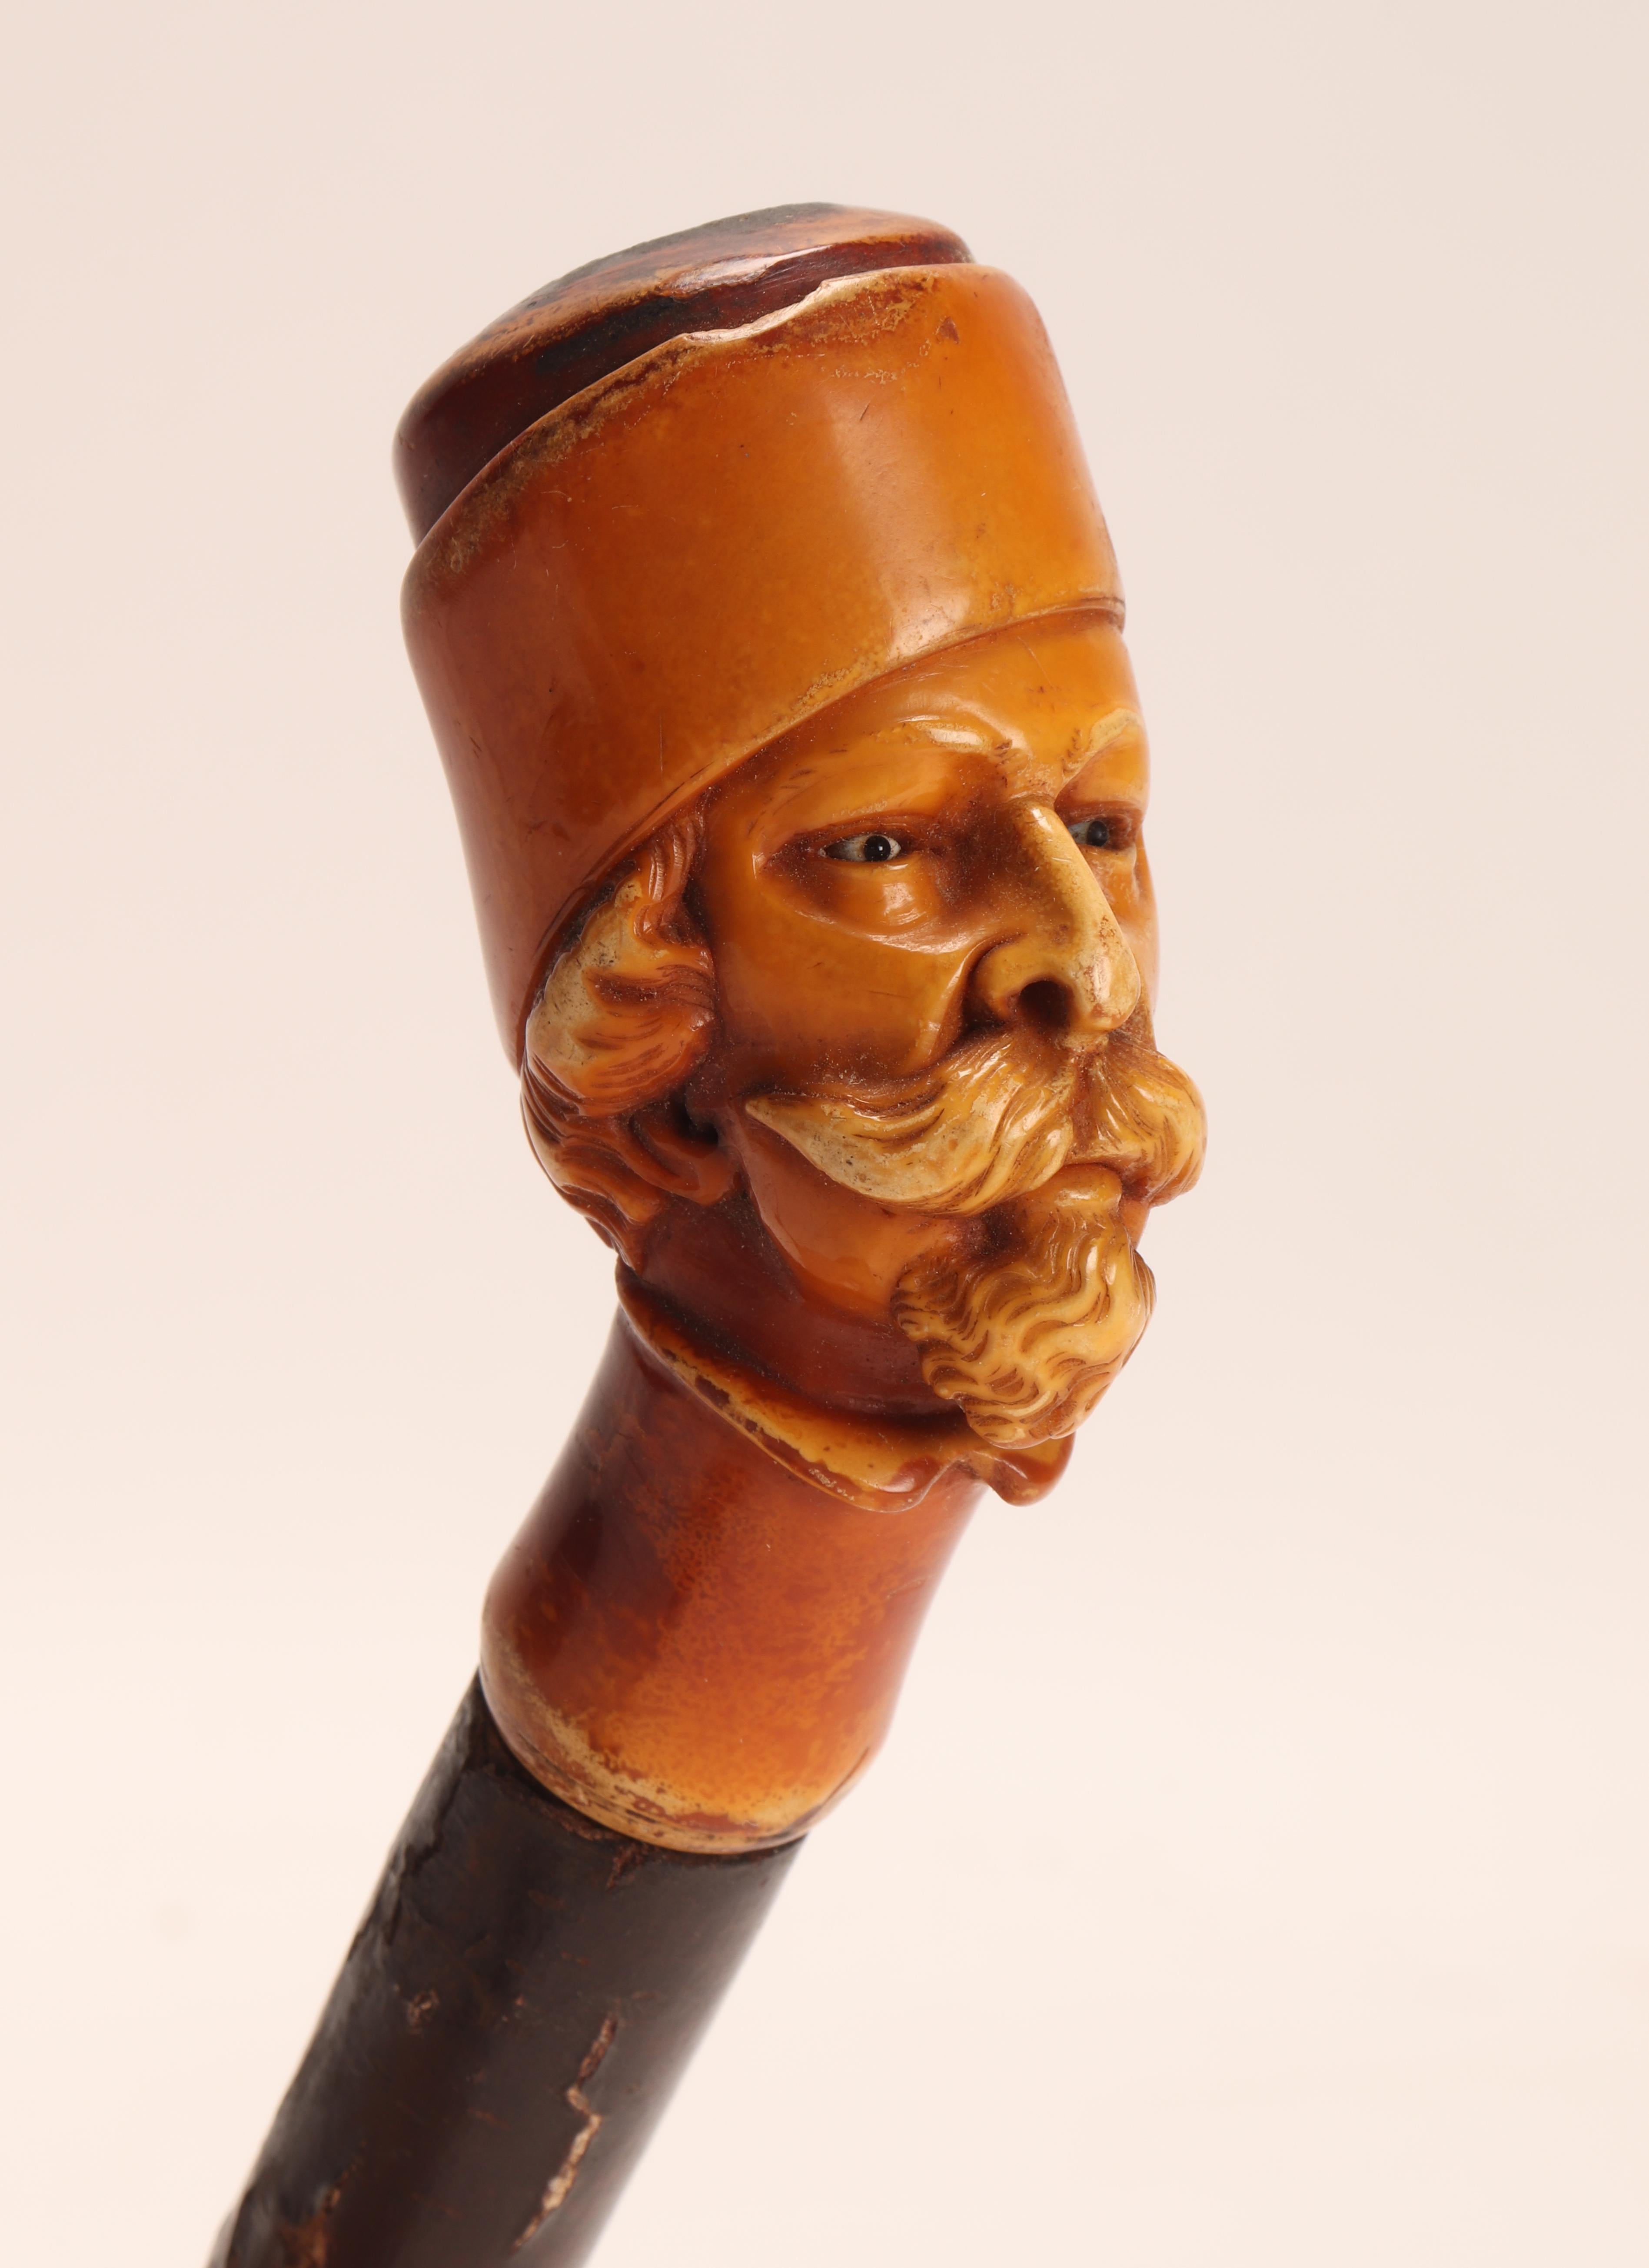 Meershaum Pipe with Garibaldi’s Head, Vienna 1890 For Sale 1